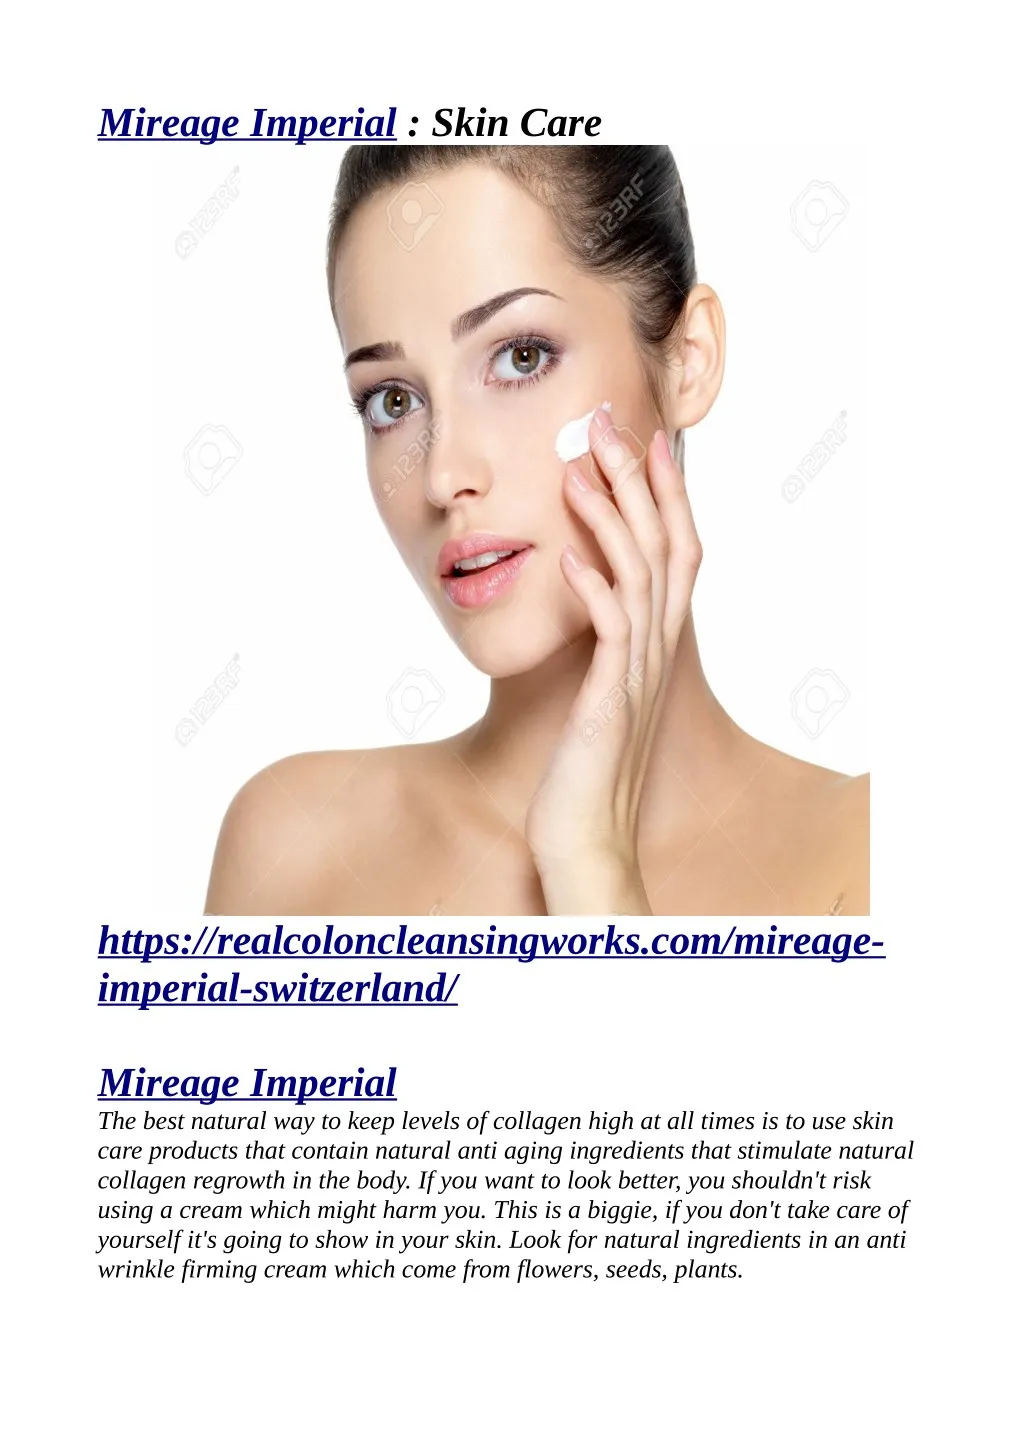 mireage imperial skin care